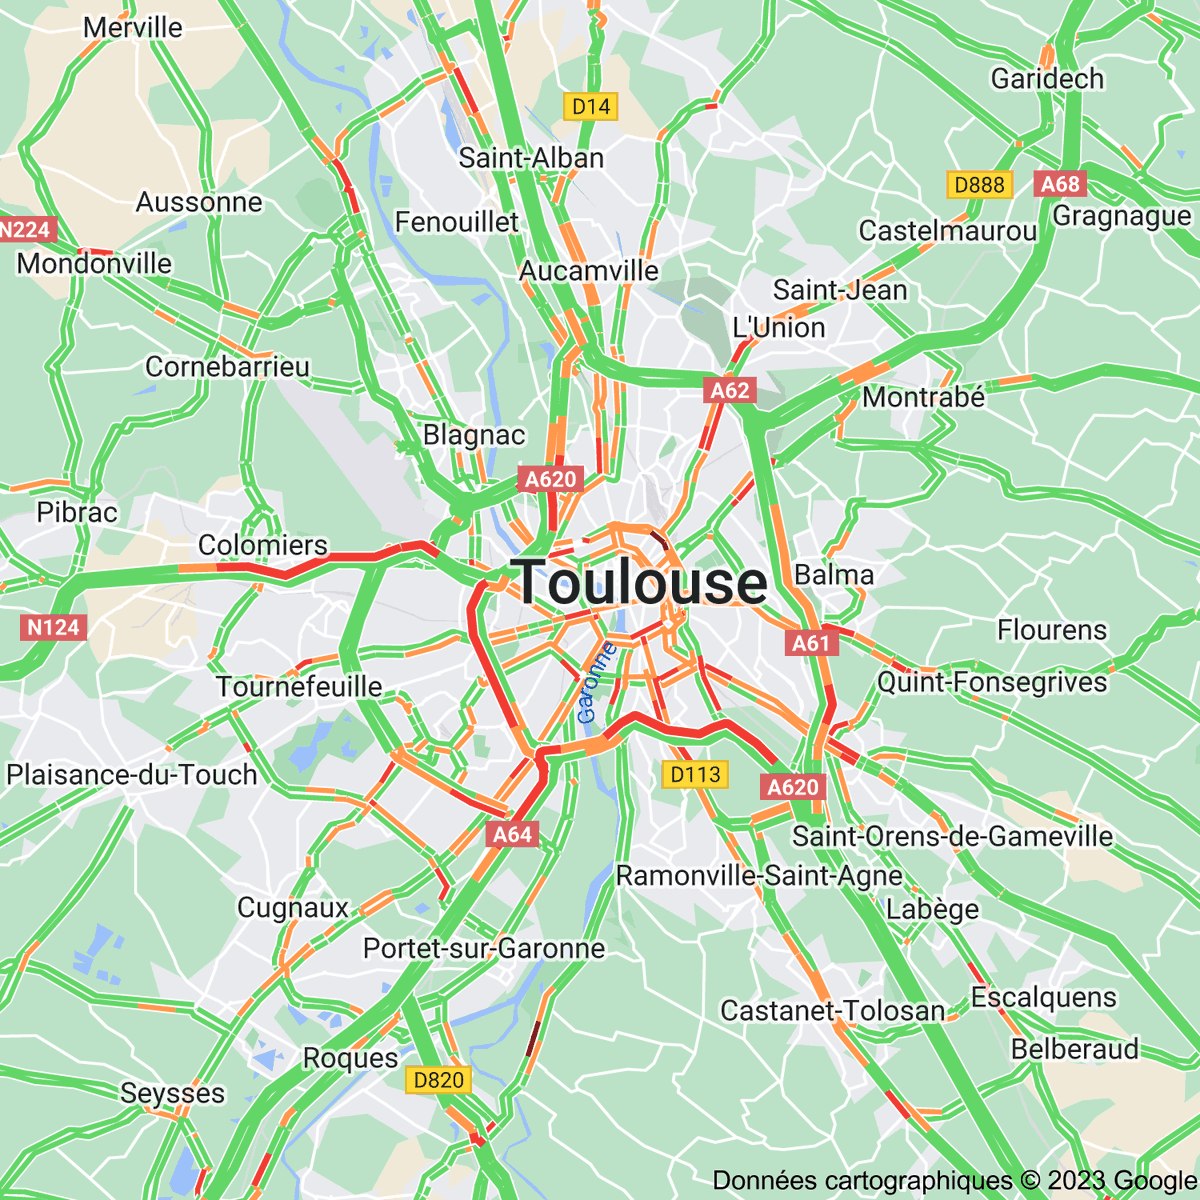 [FLASH 18:50] Trafic à Toulouse toulousetrafic.com #Toulouse #ToulousePeriph #InfoTrafic